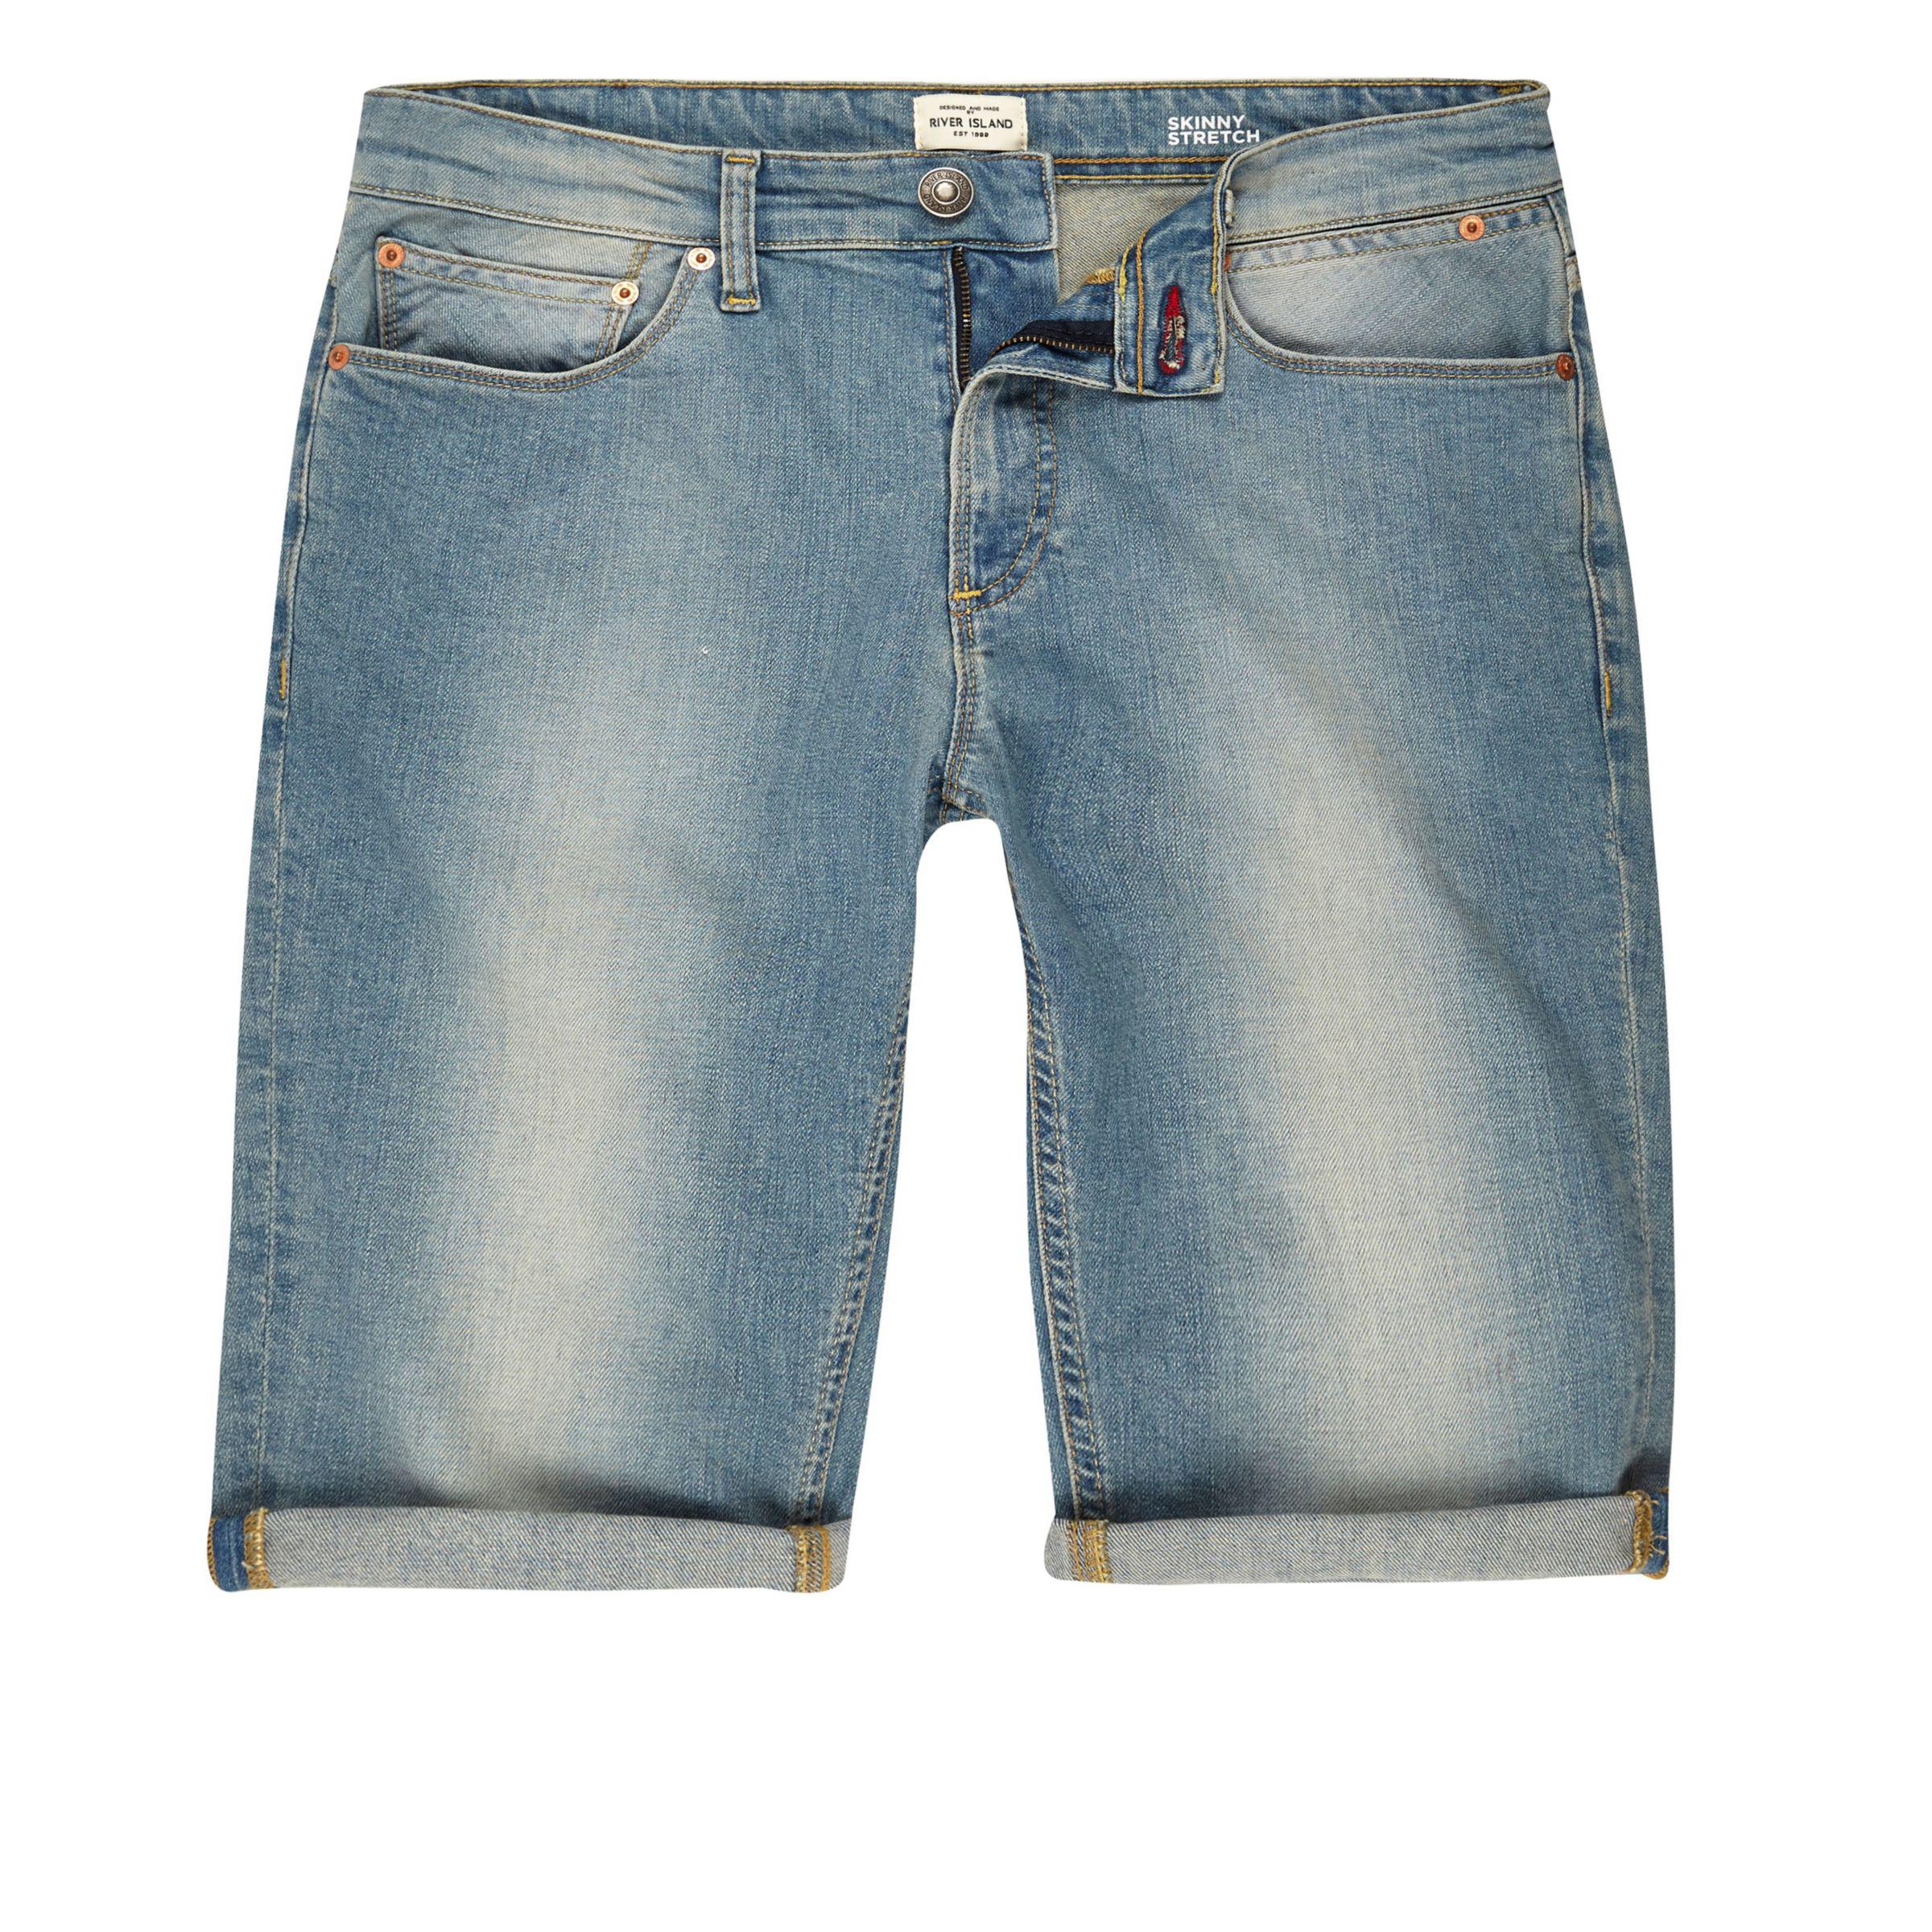 River Island Light Blue Wash Skinny Fit Denim Shorts in Blue for Men - Lyst